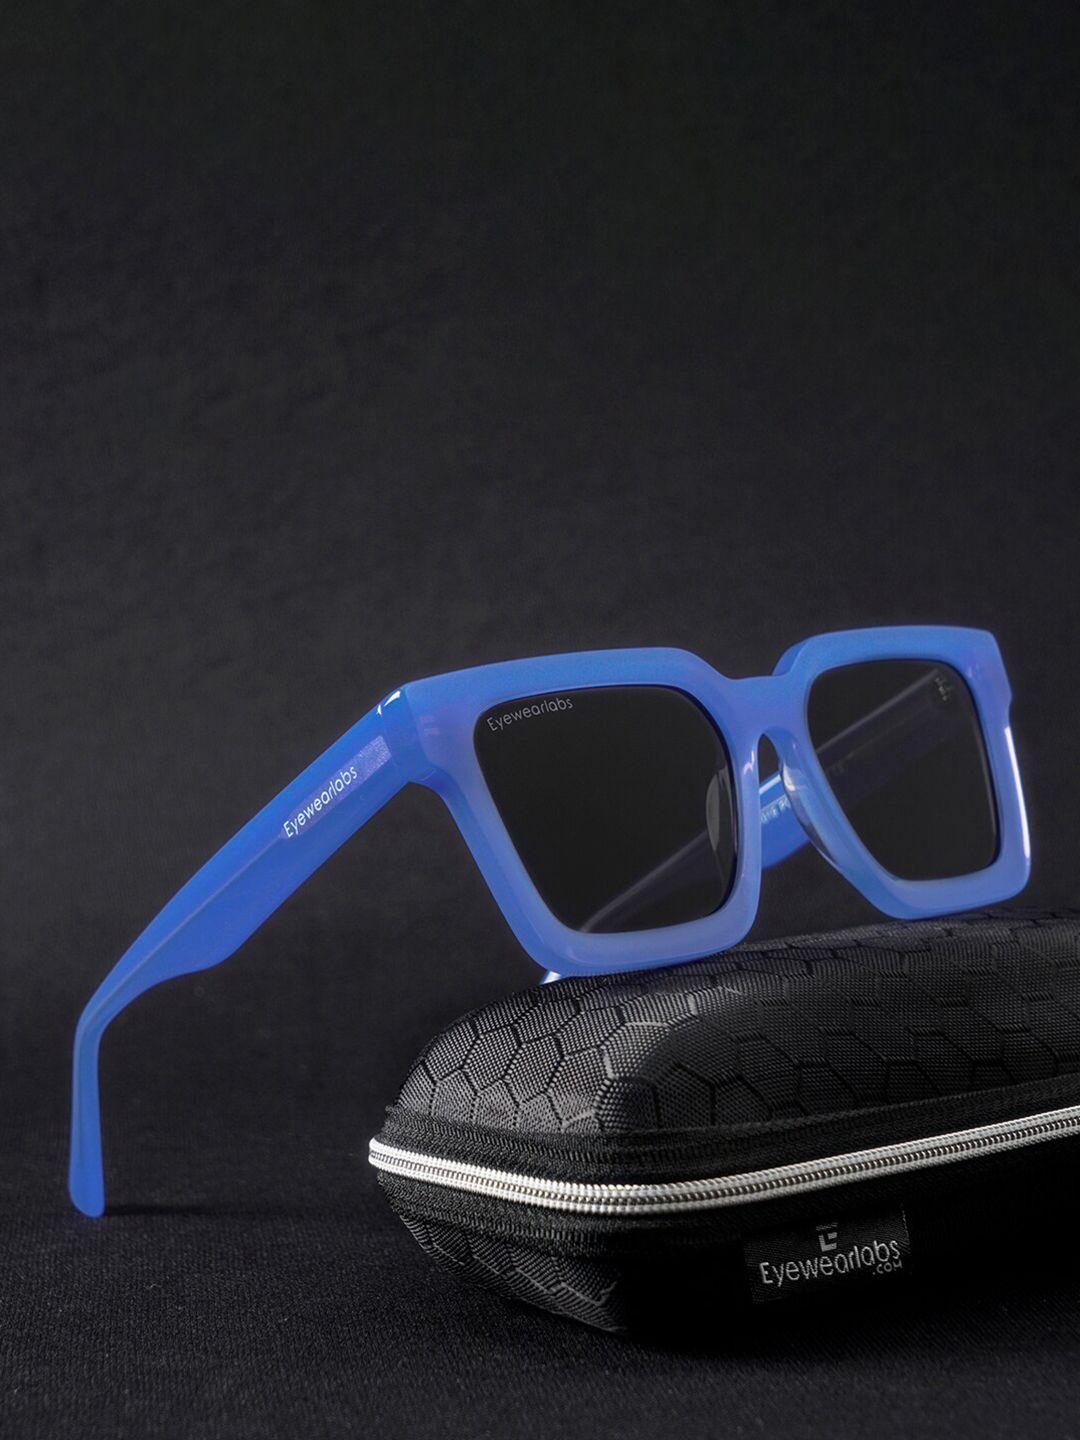 eyewearlabs women lens & square sunglasses with polarised lens cbrookepblsc2el1174